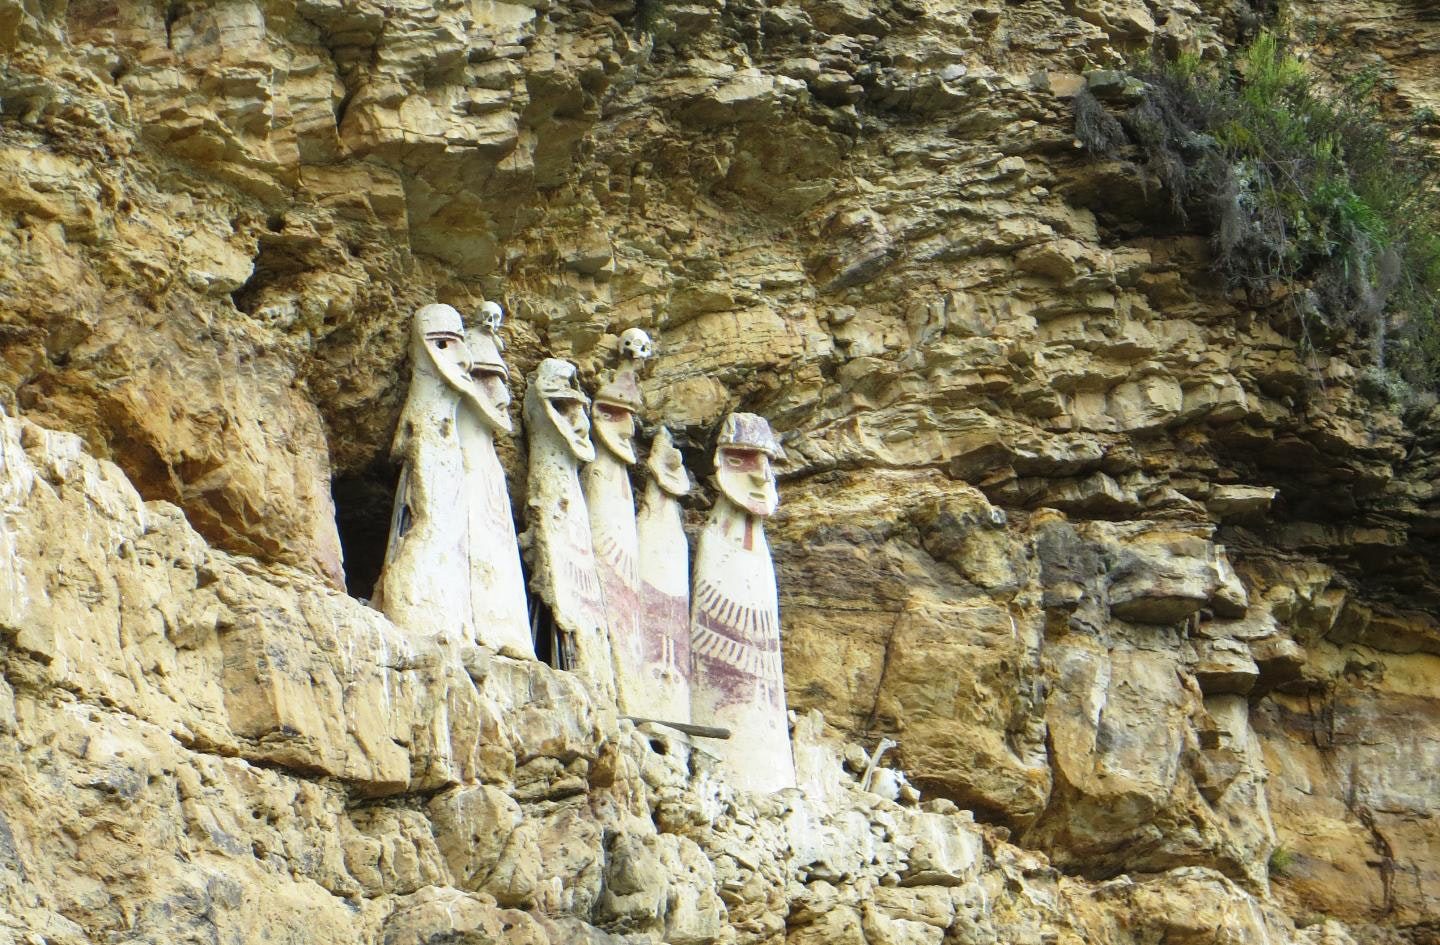 Sarcophagi of the Chachapoya people